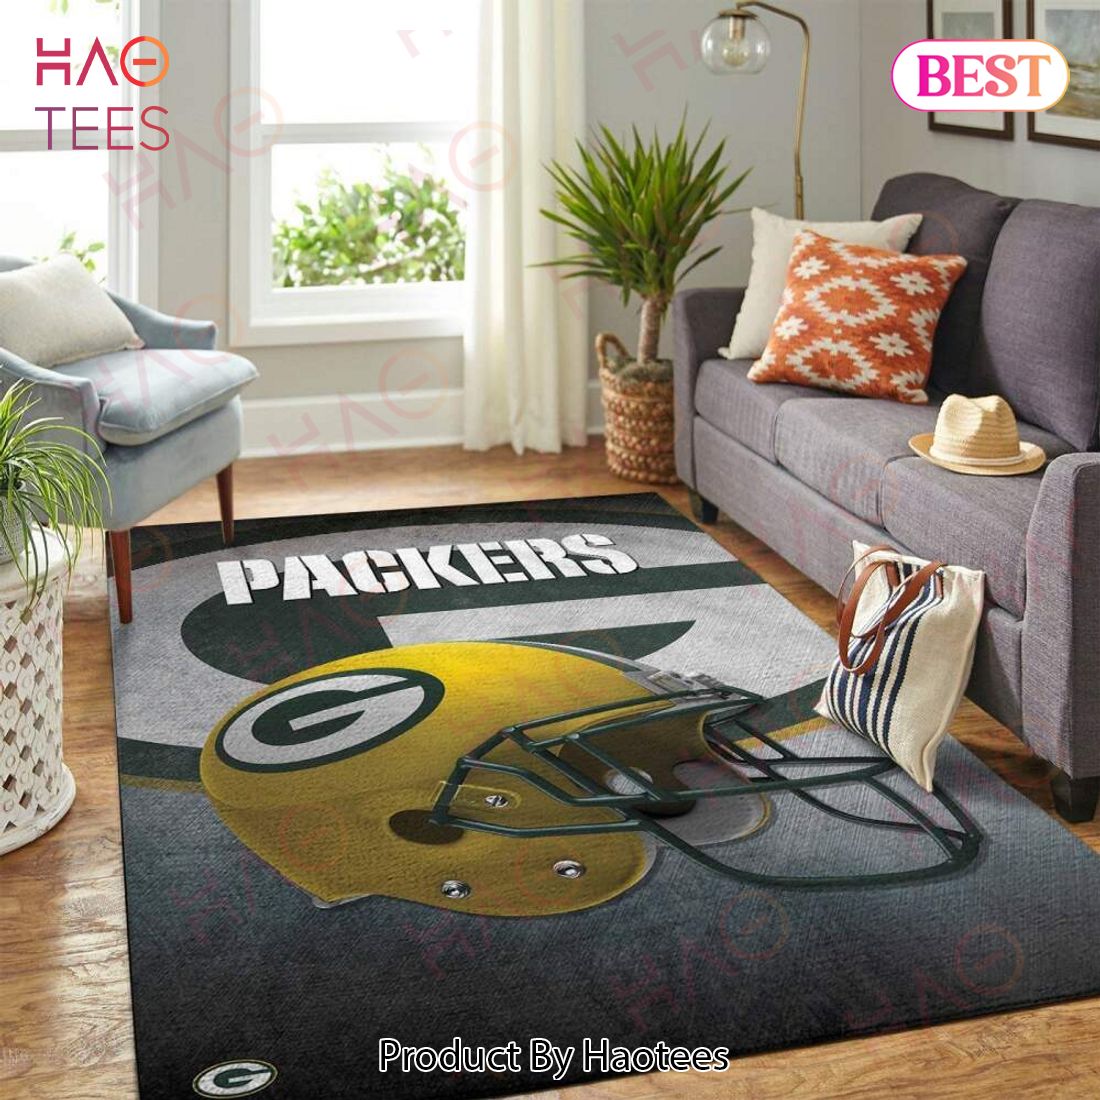 Green Bay Packers Nfl Area Rugs Team Helmet Living Room Carpet Sports Rug Regtangle Carpet Floor Decor Home Decor